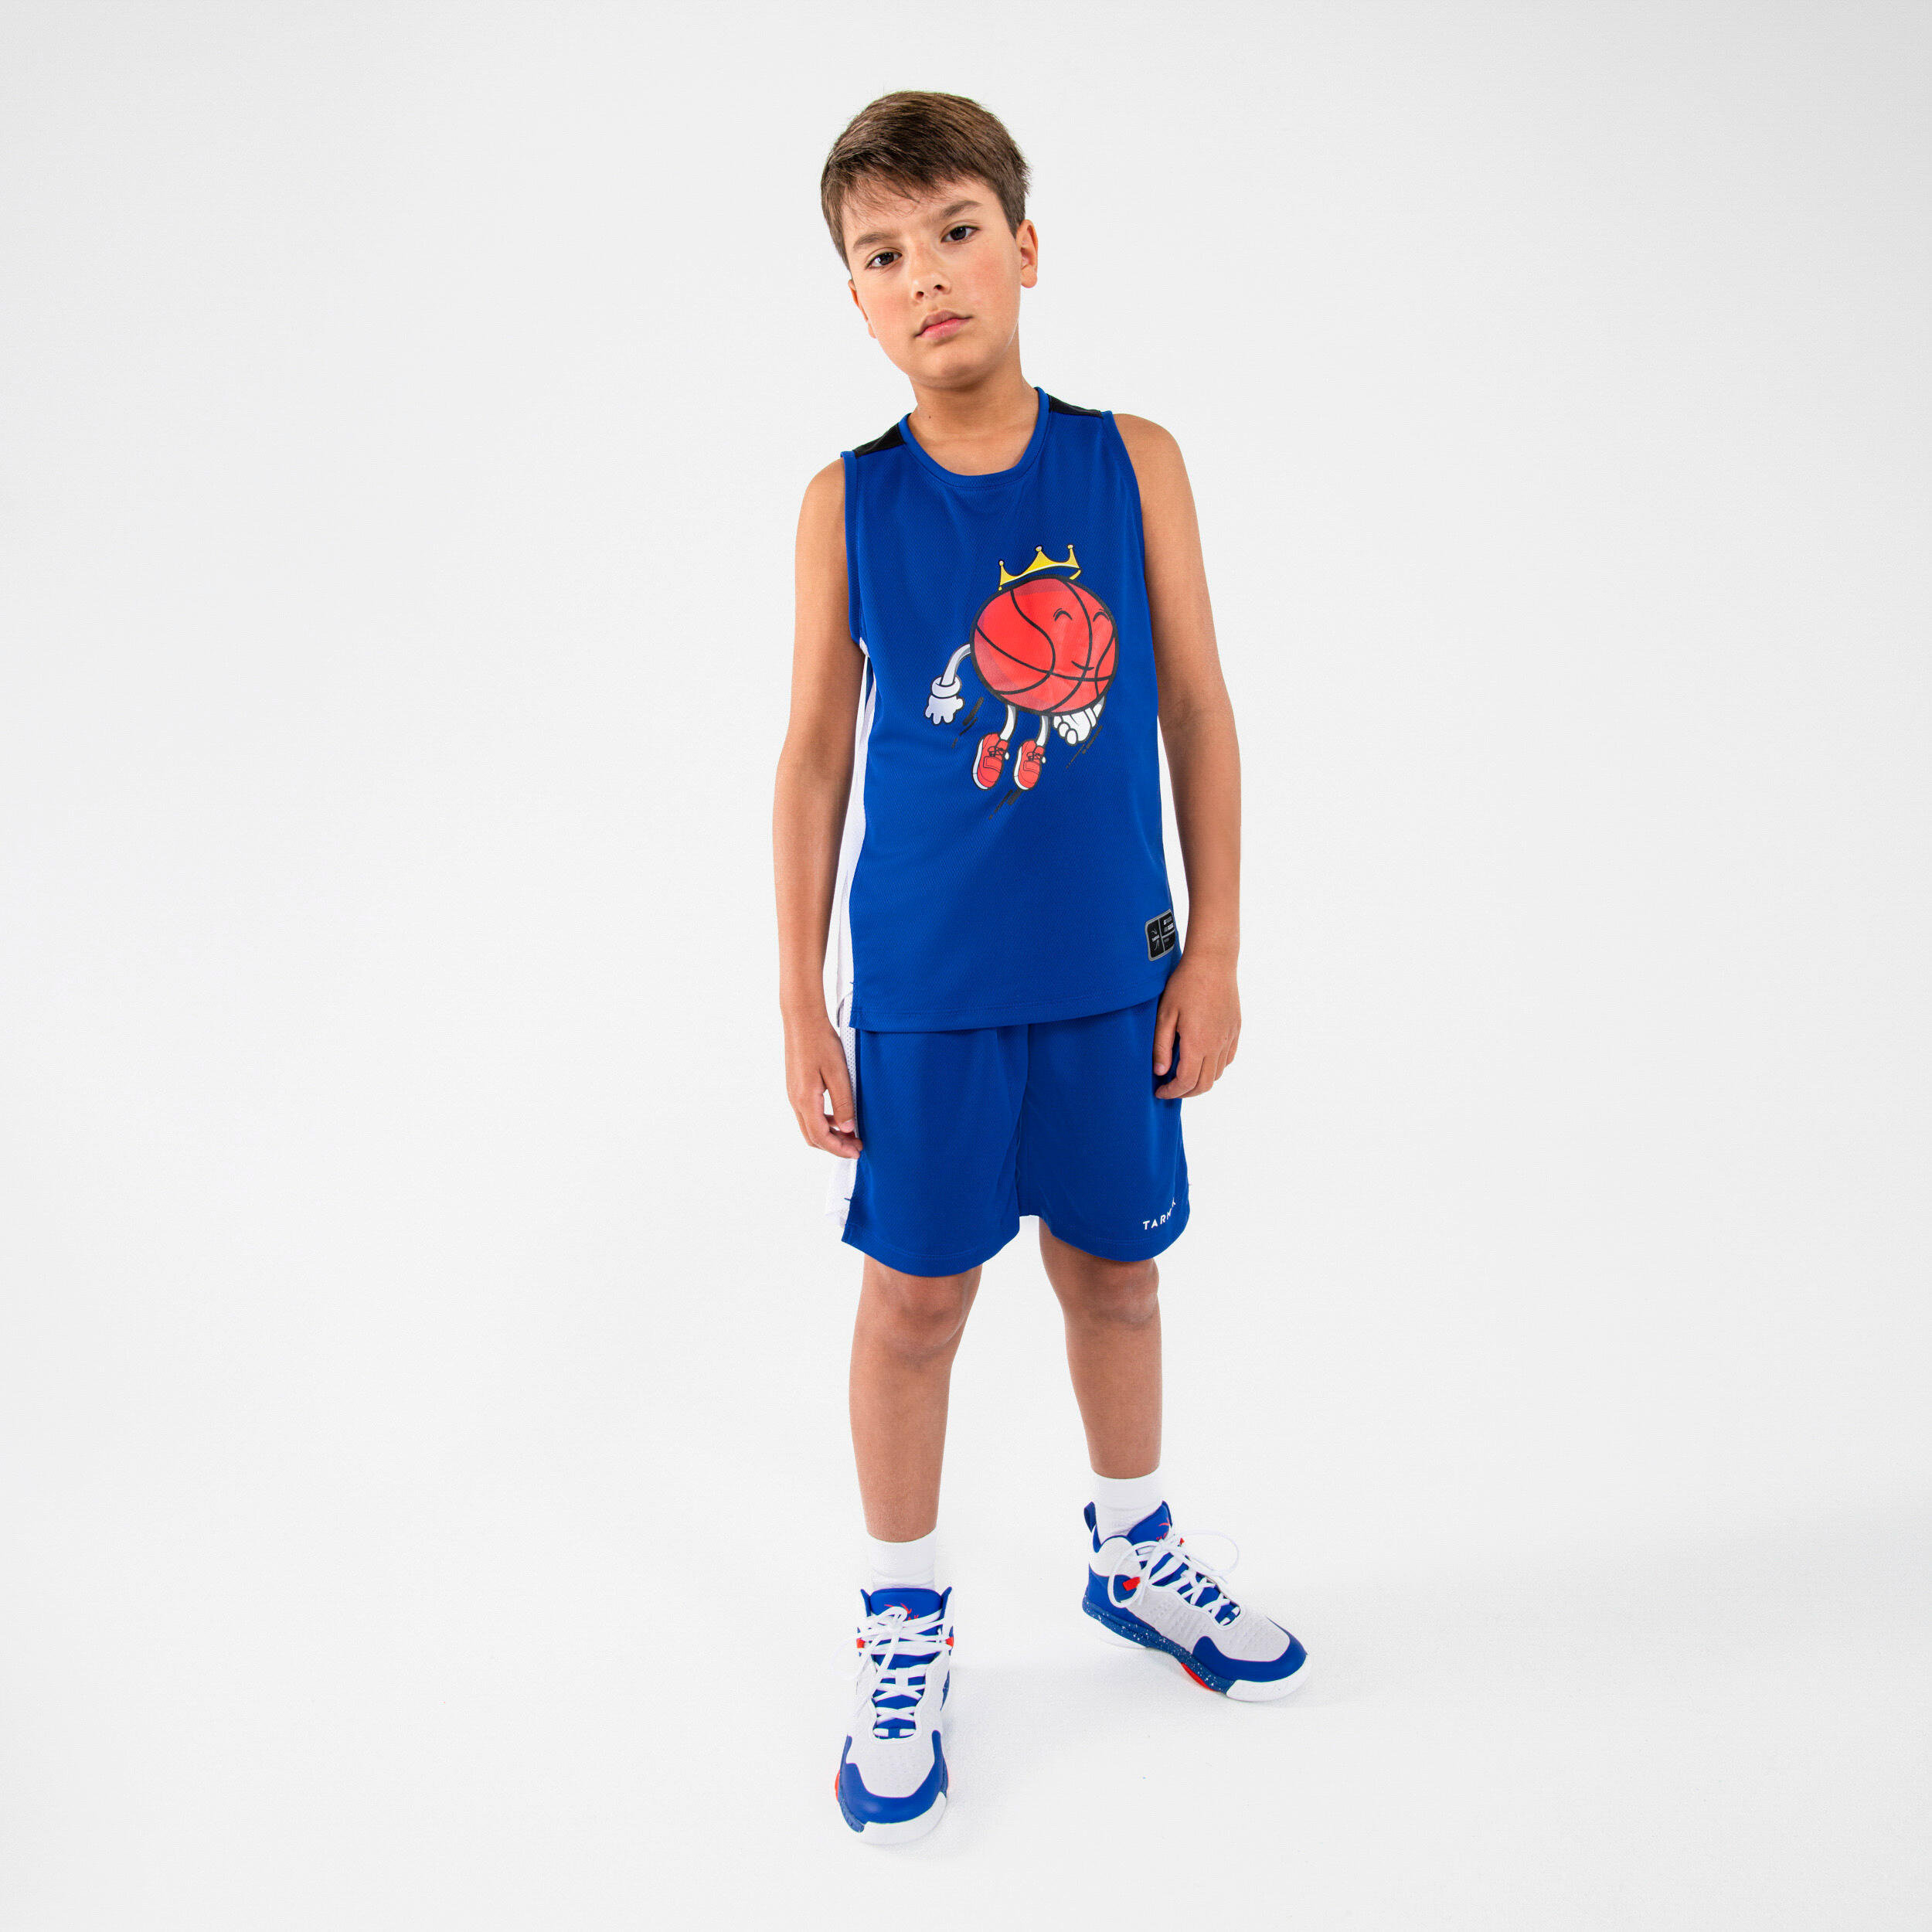 Kids' Sleeveless Basketball Jersey T500 - Blue/White 5/6